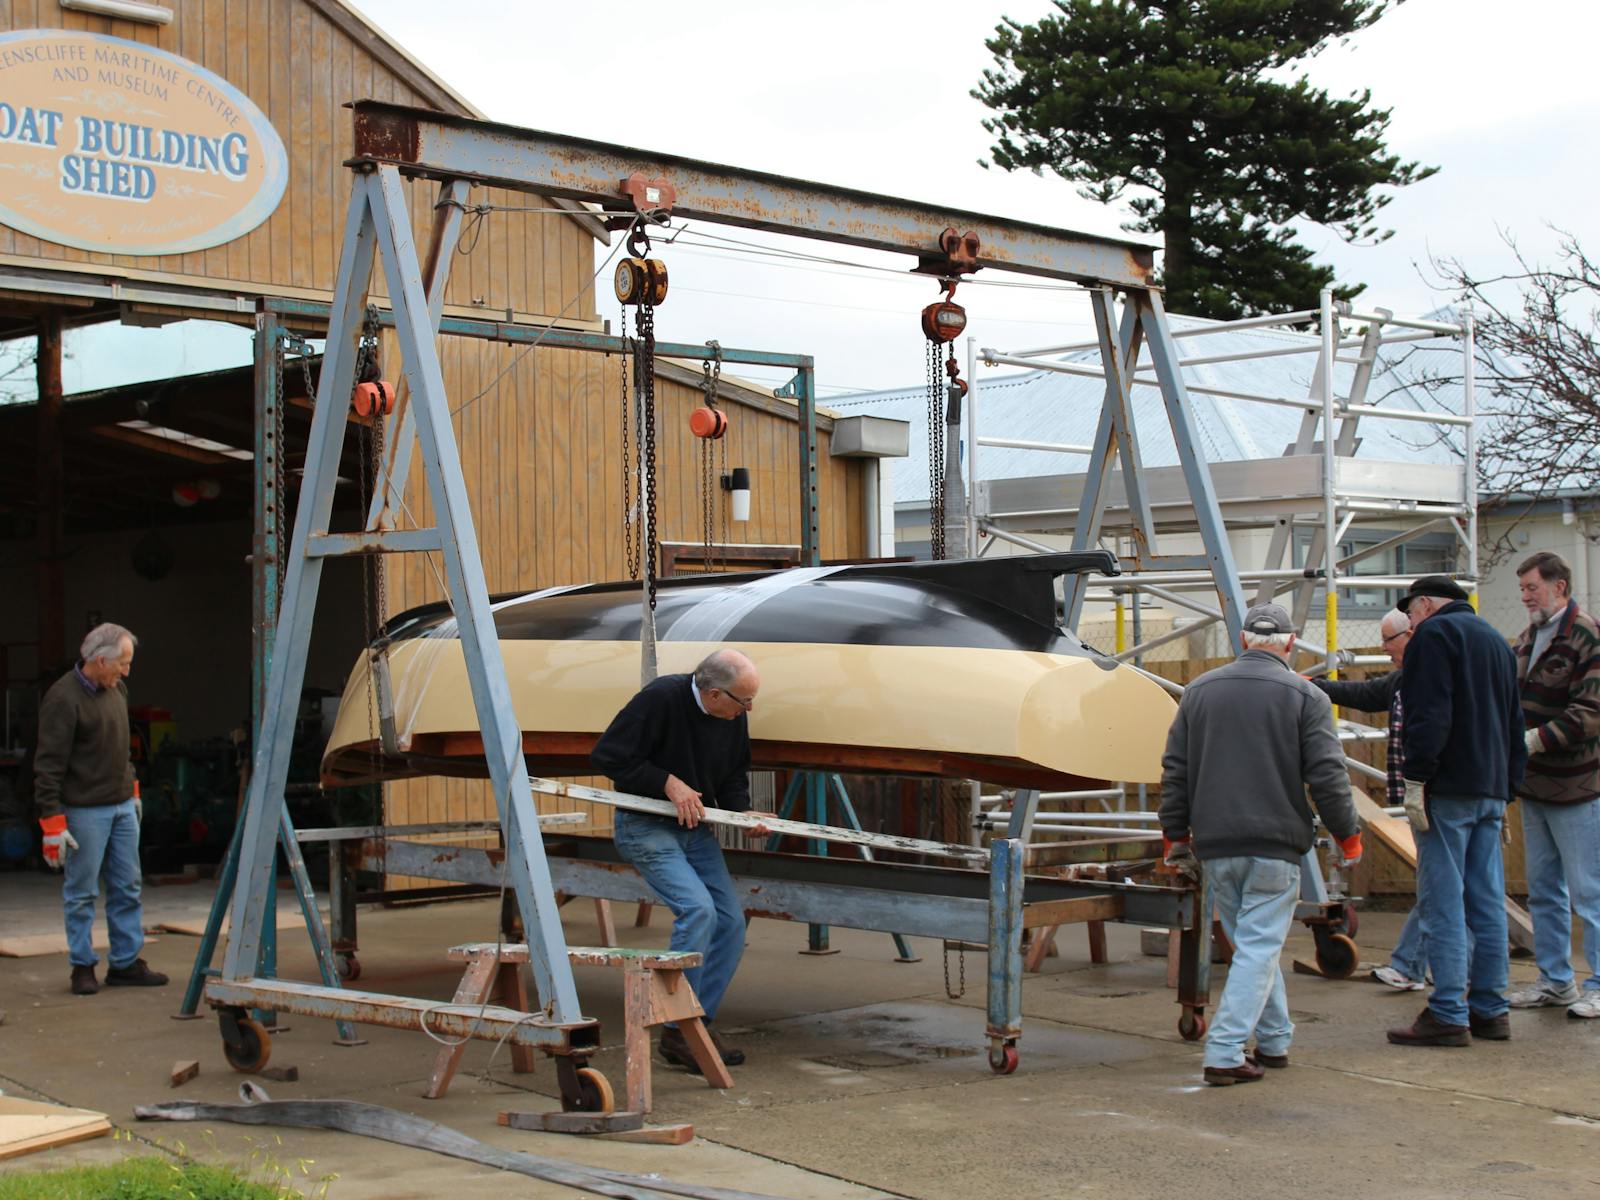 Wooden boats fascinate visitors and volunteers alike.